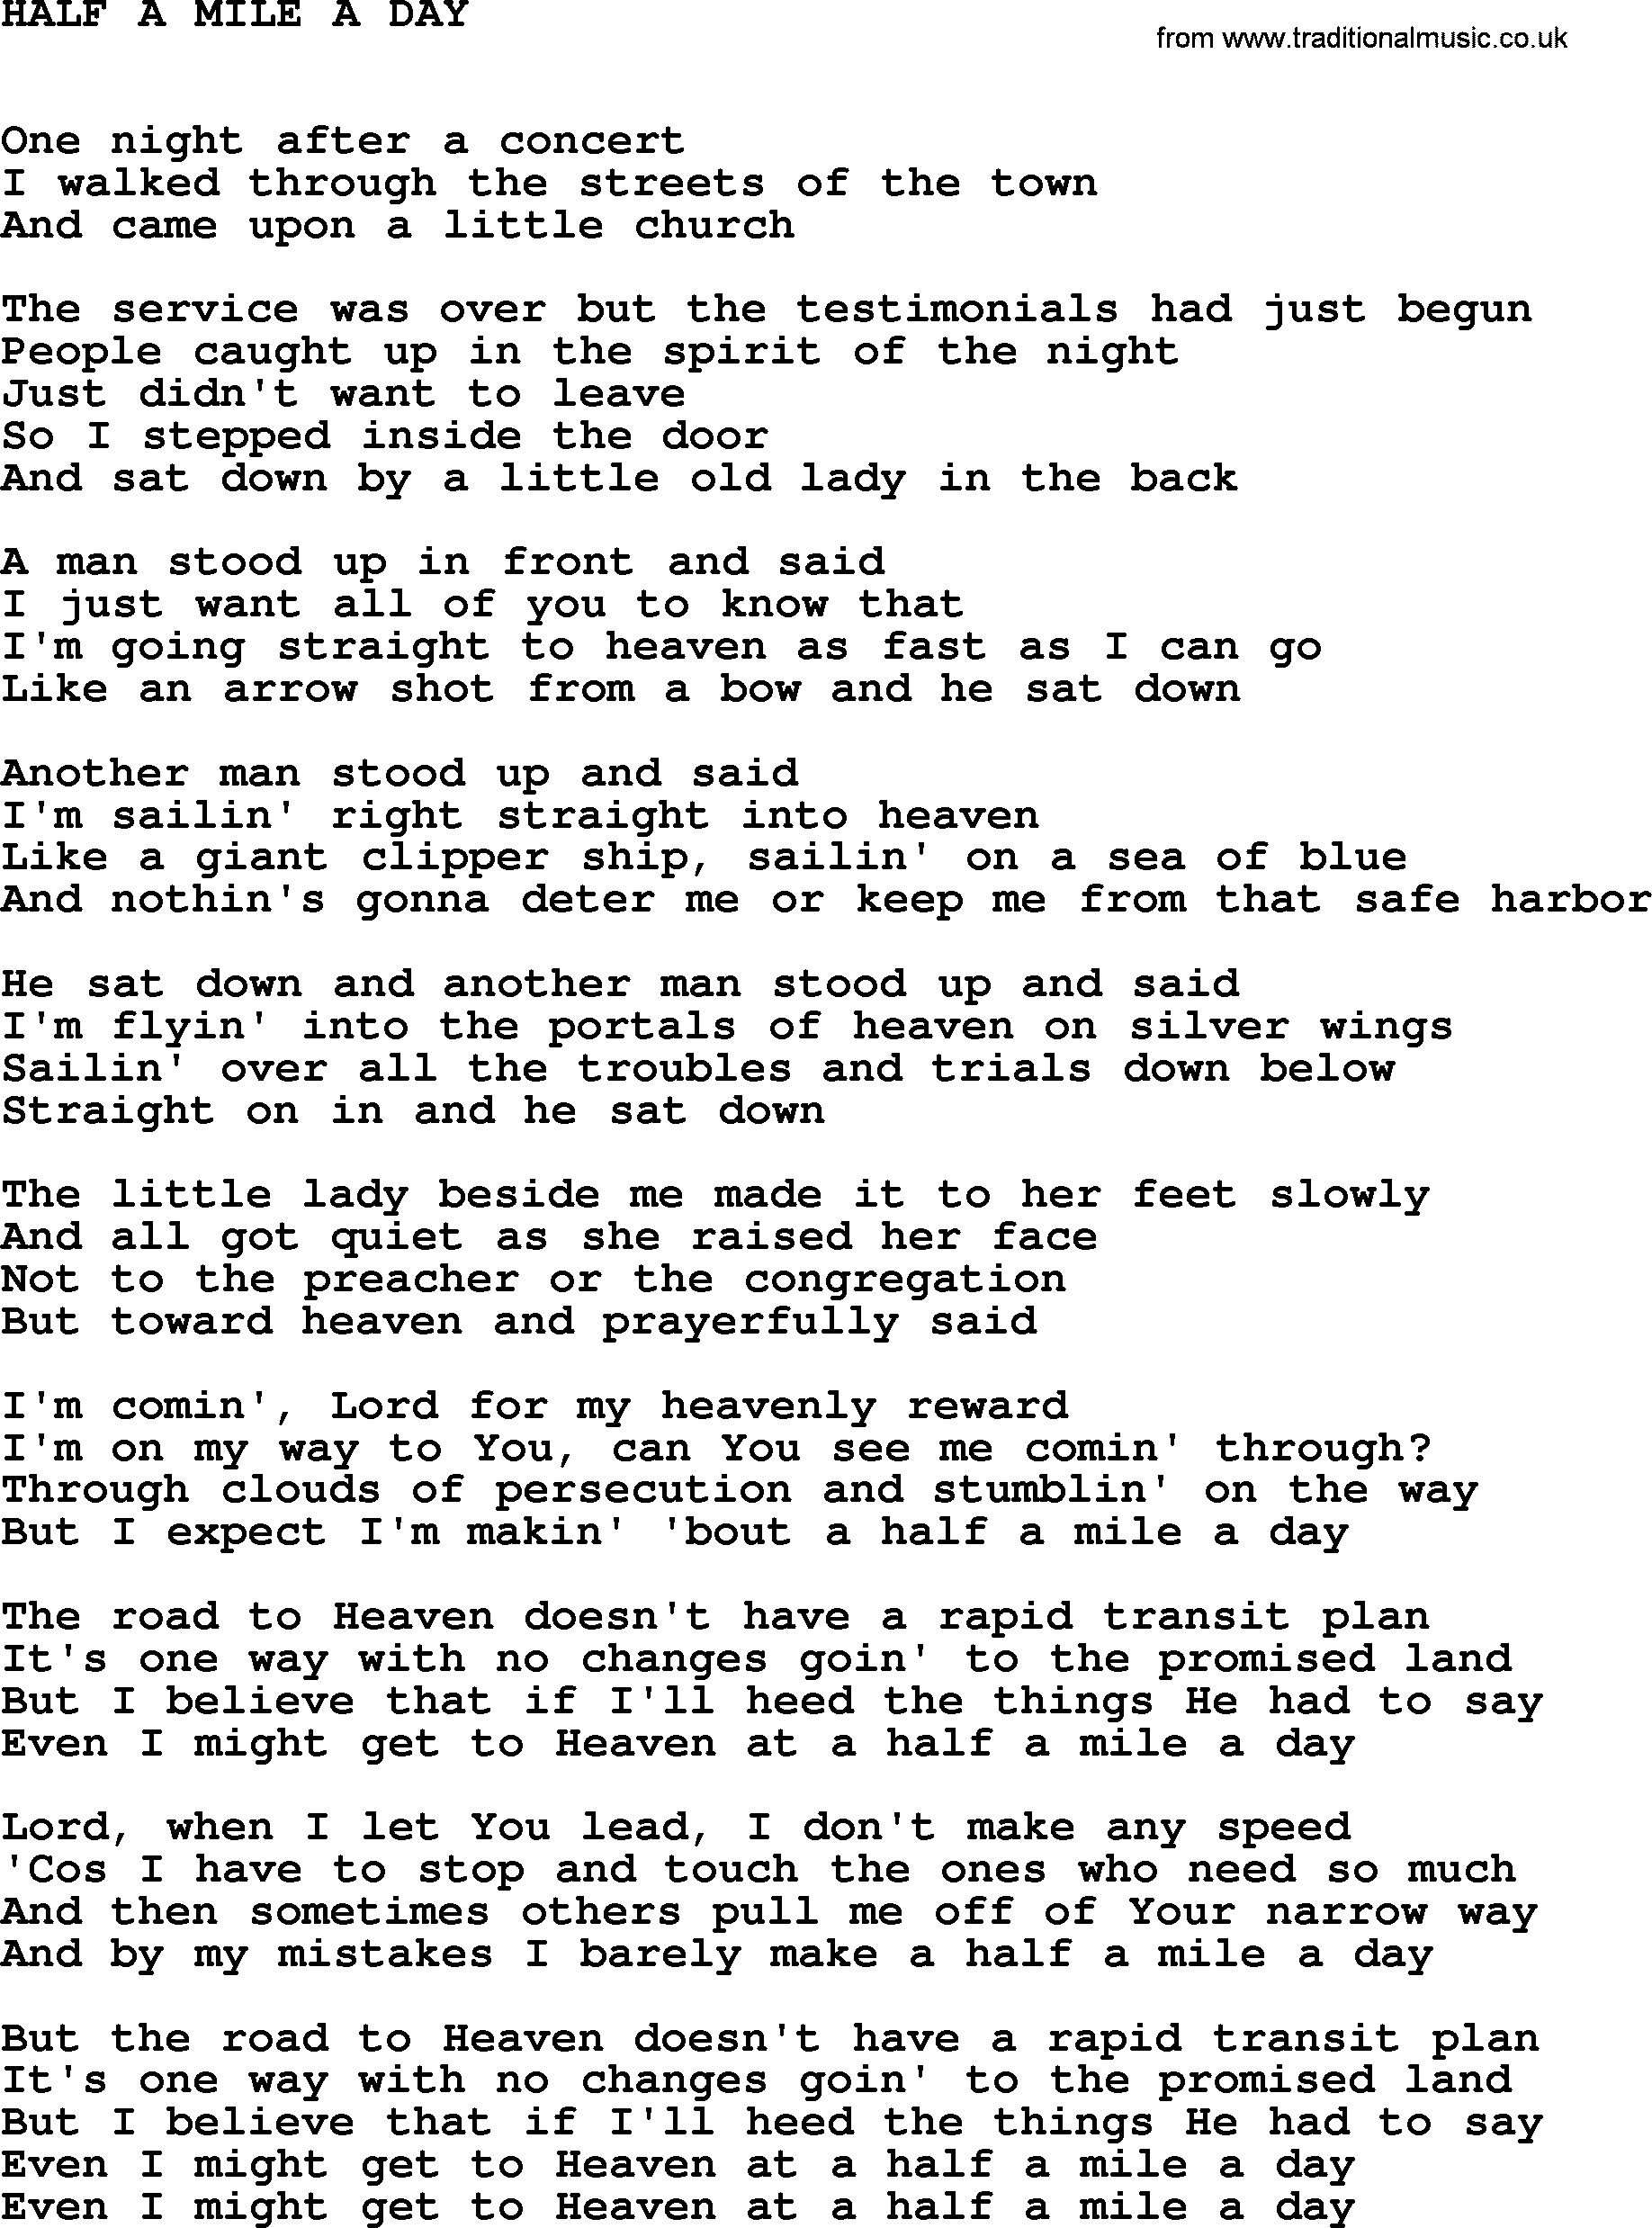 Johnny Cash song Half A Mile A Day.txt lyrics